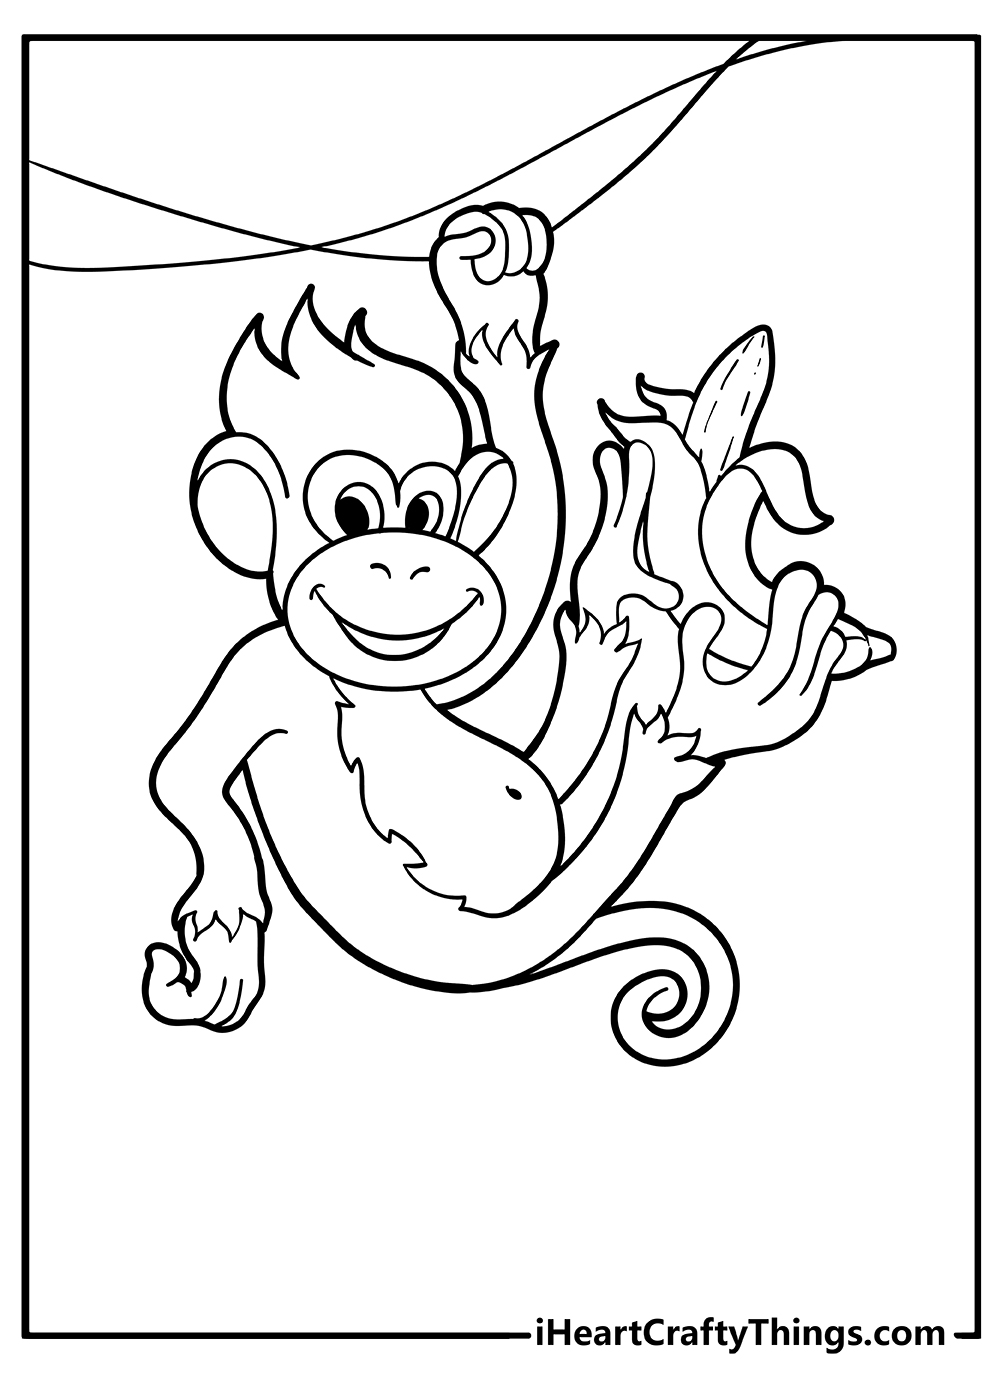 Monkey, Cute Big-Eyed Monkey in Colour Pencil